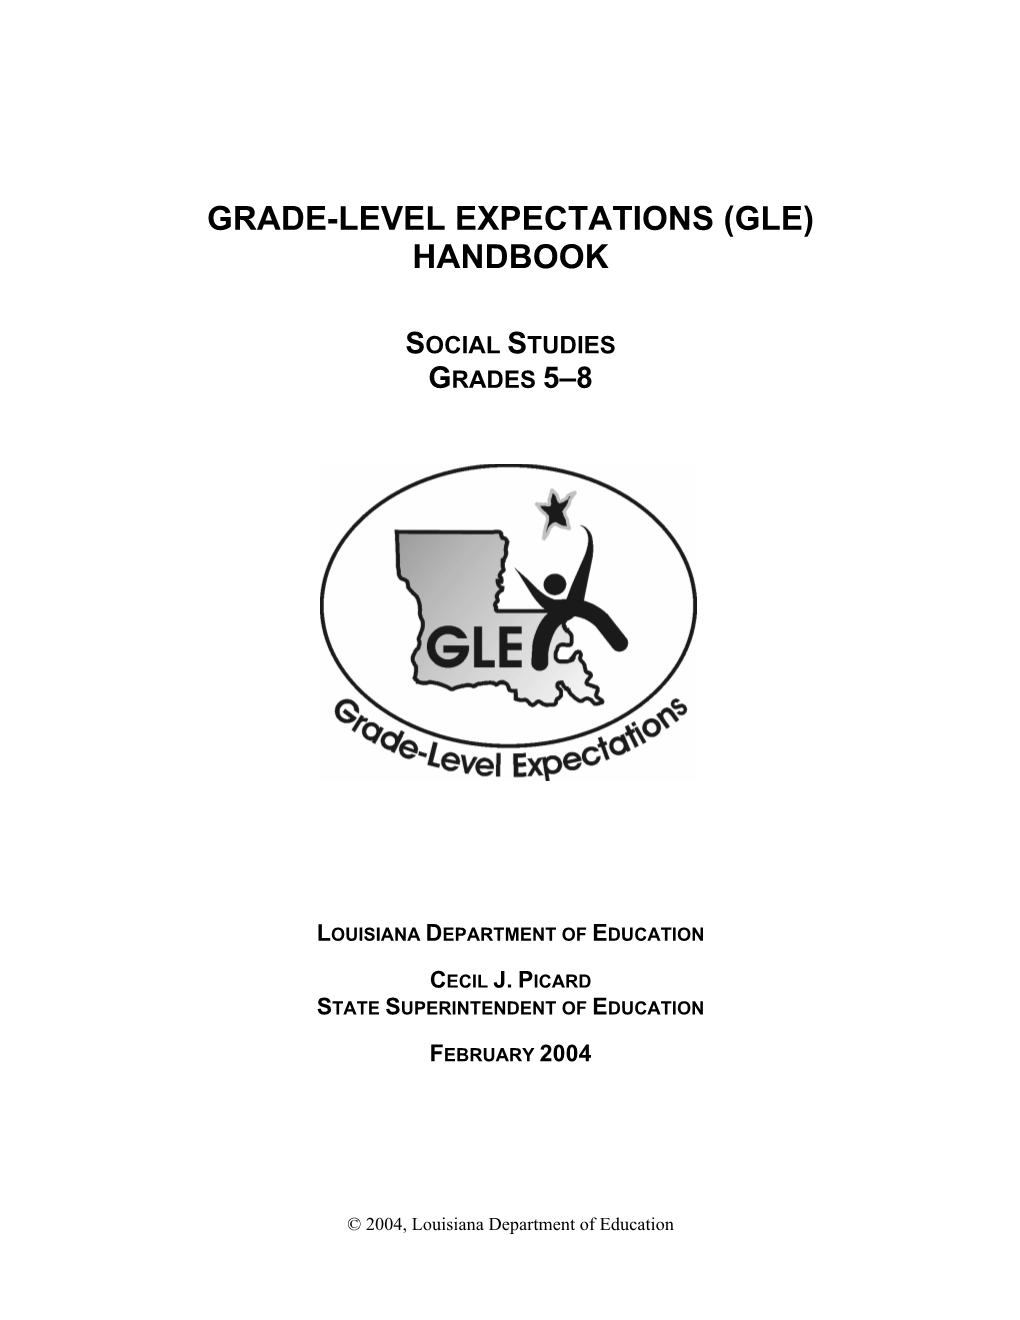 Grade-Level Expectations (Gle) Handbook